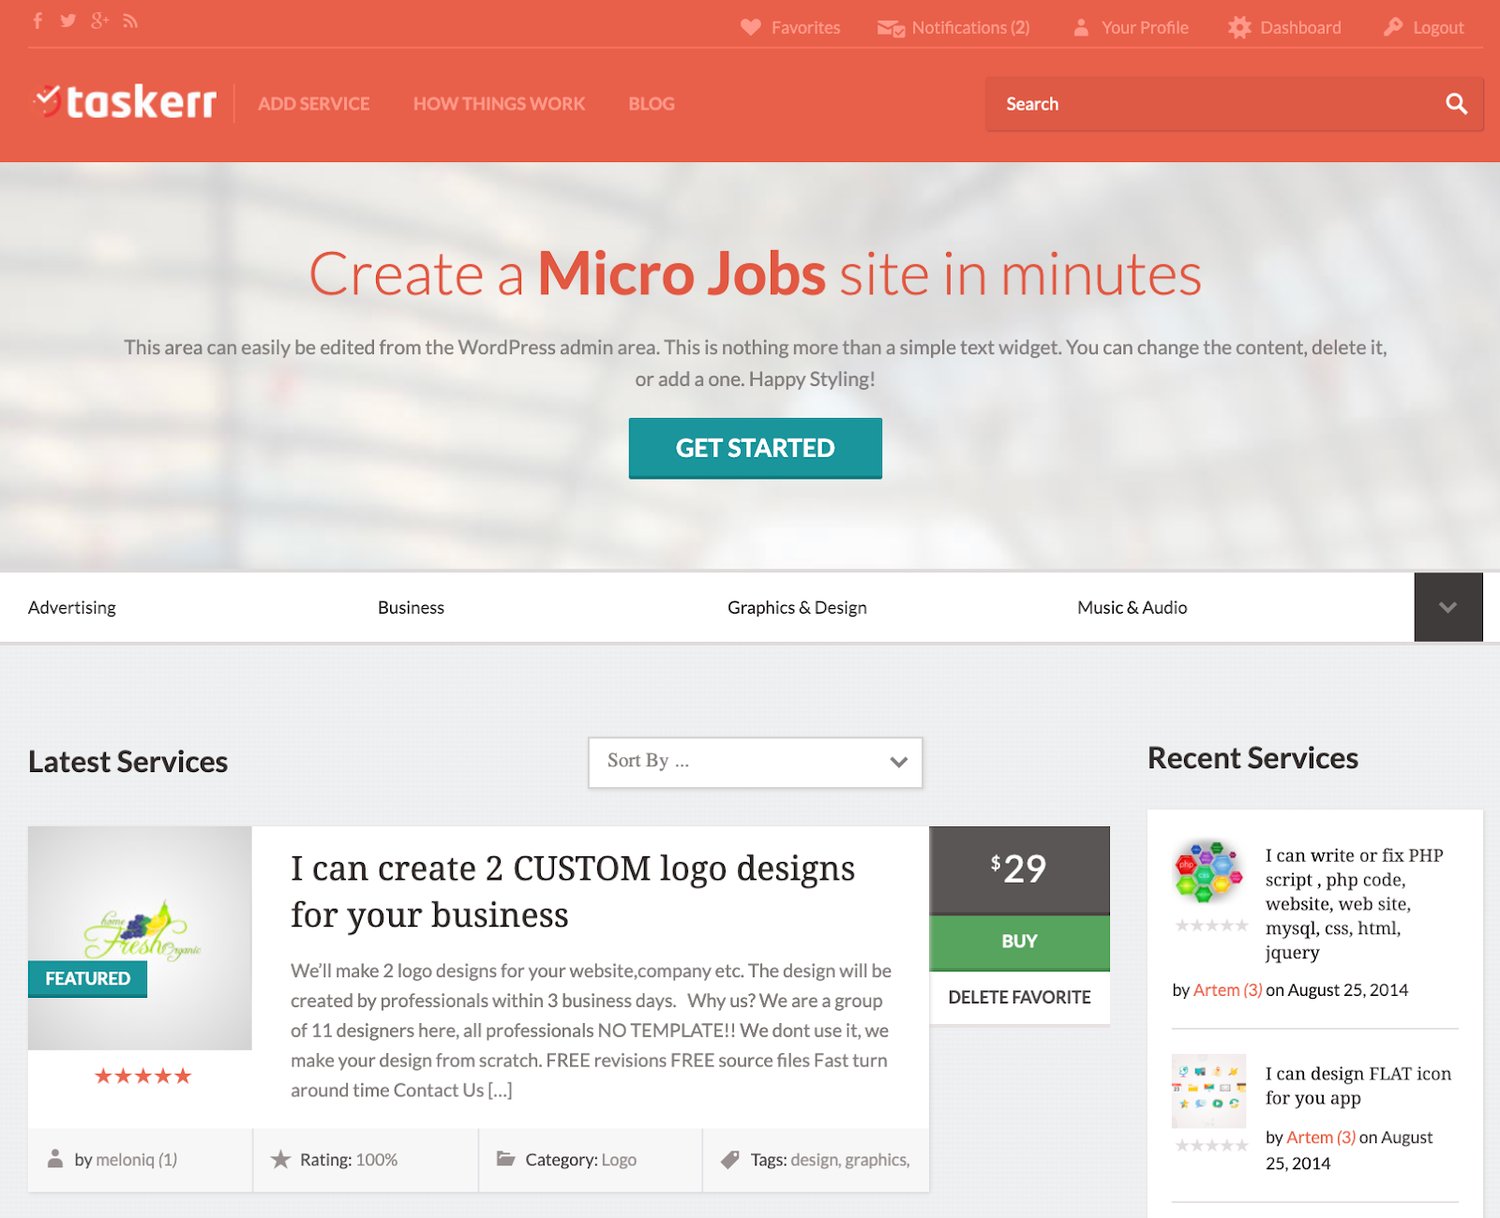 demo micro job site using taskerr wordpress theme